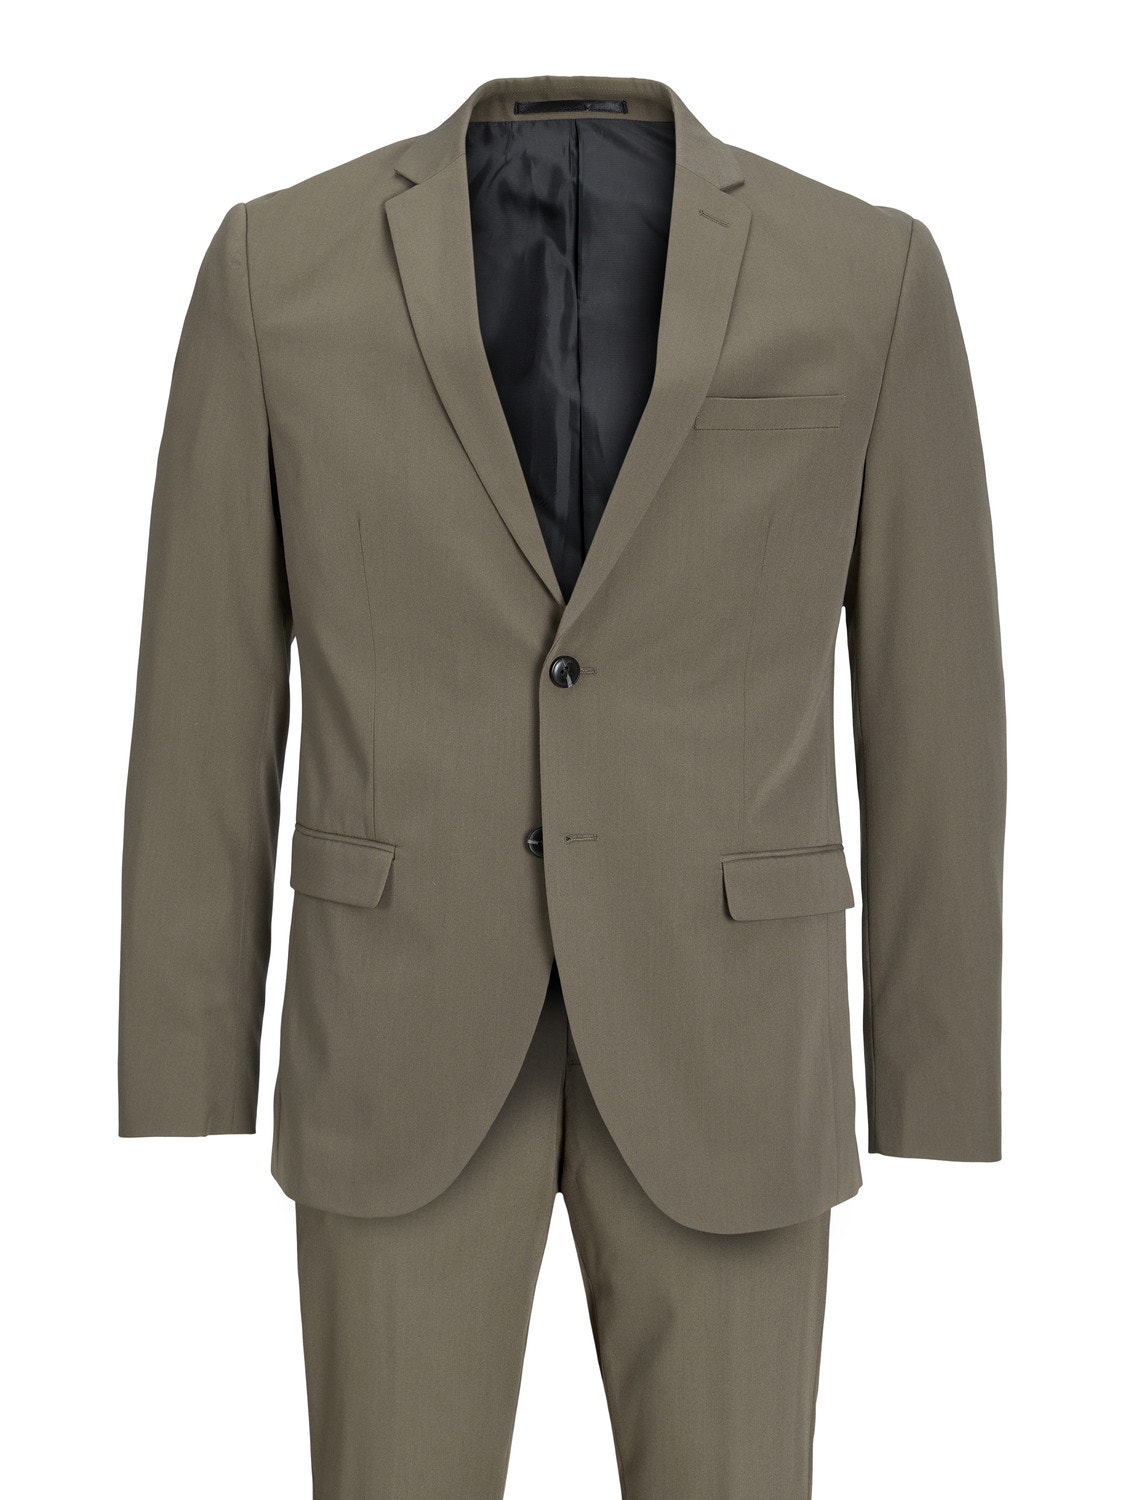 Jack & Jones JPRFRANCO Super Slim Fit Suit -Bungee Cord - 12181339